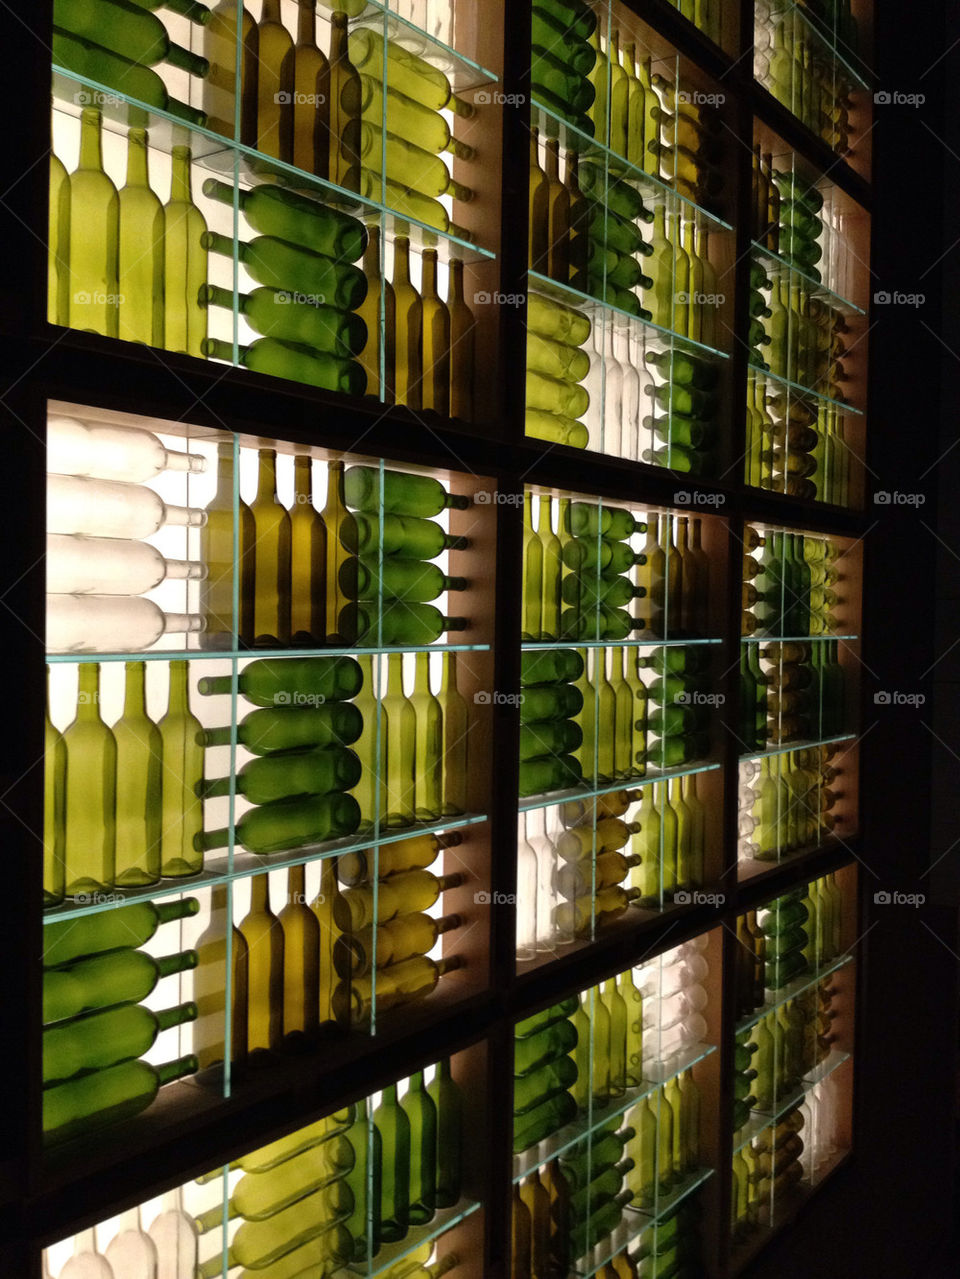 design wine bottles display by optostar